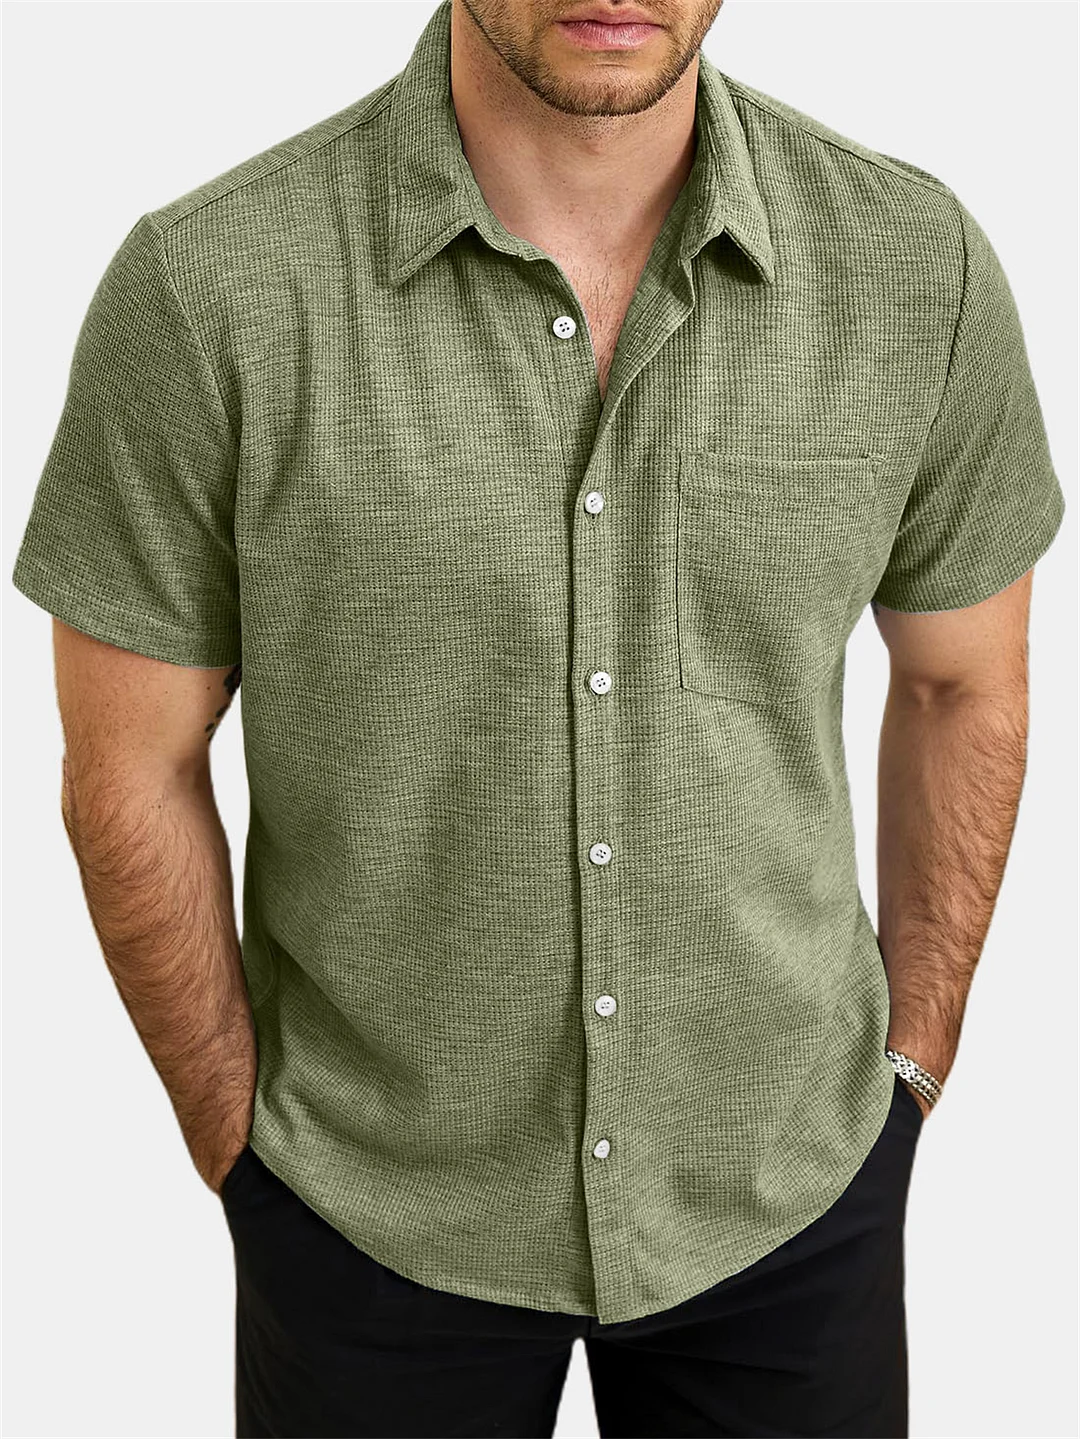 Suitmens Men's Waffle Pocket Casual Short Sleeve Shirt